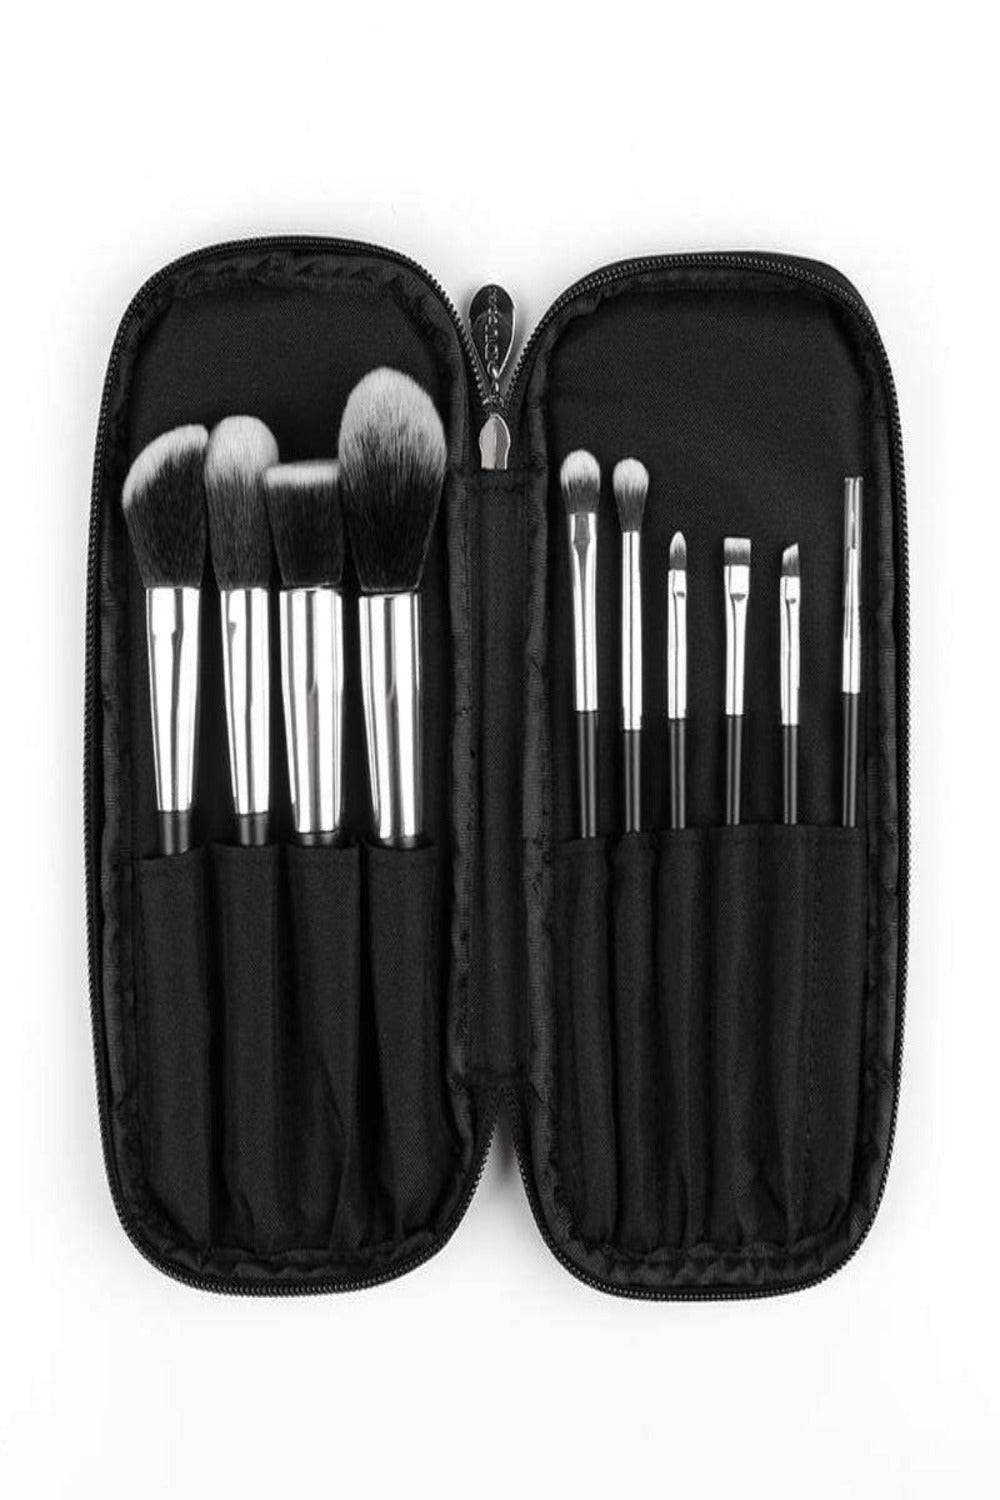 10 Pc Professional Makeup Brush Set with Travel Case - TGC Boutique - Makeup Brushes